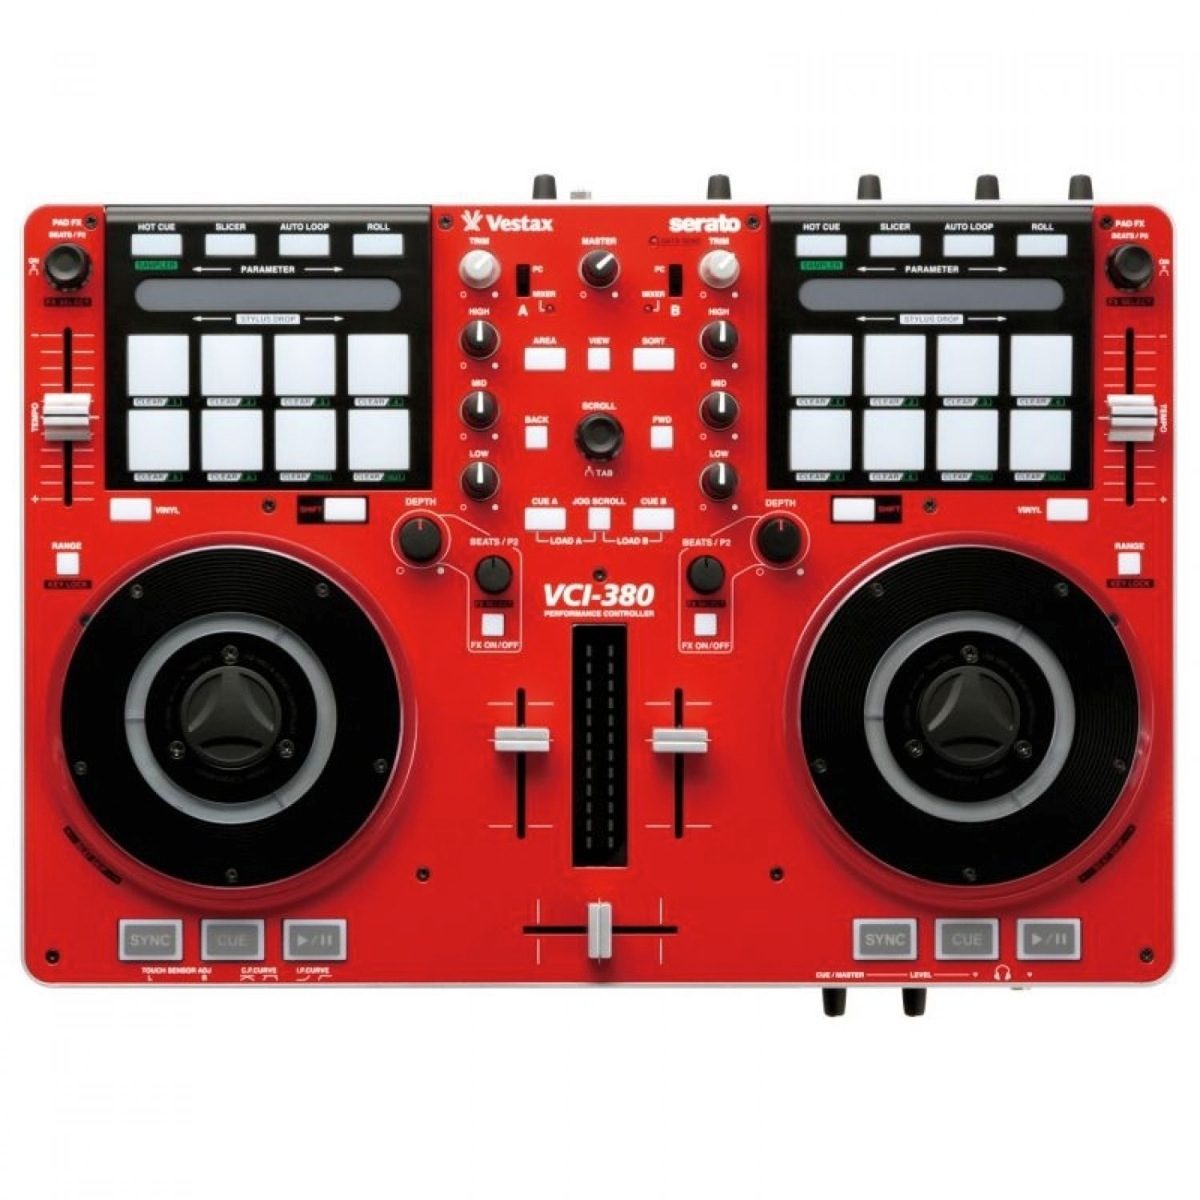 Vestax VCI-380 USB MIDI DJ Controller | zZounds